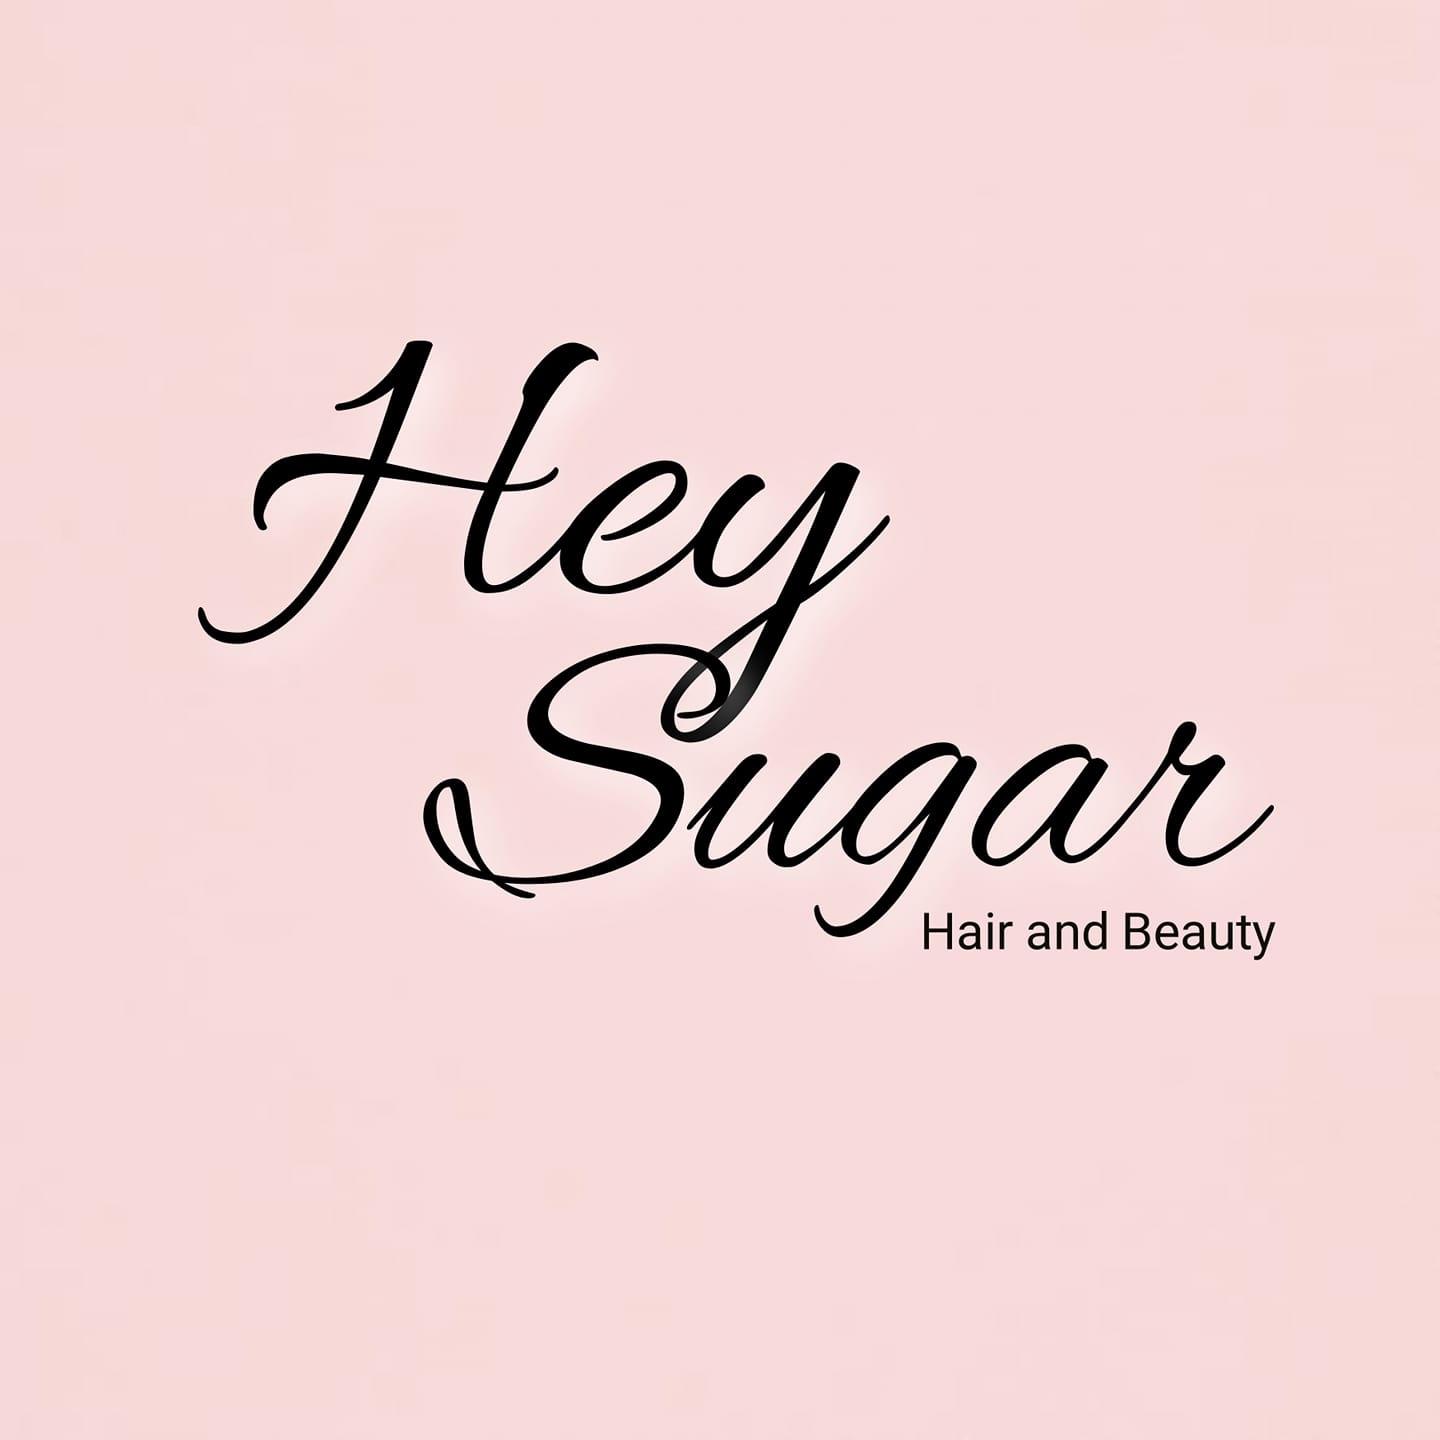 Hey Sugar Hair and Beauty